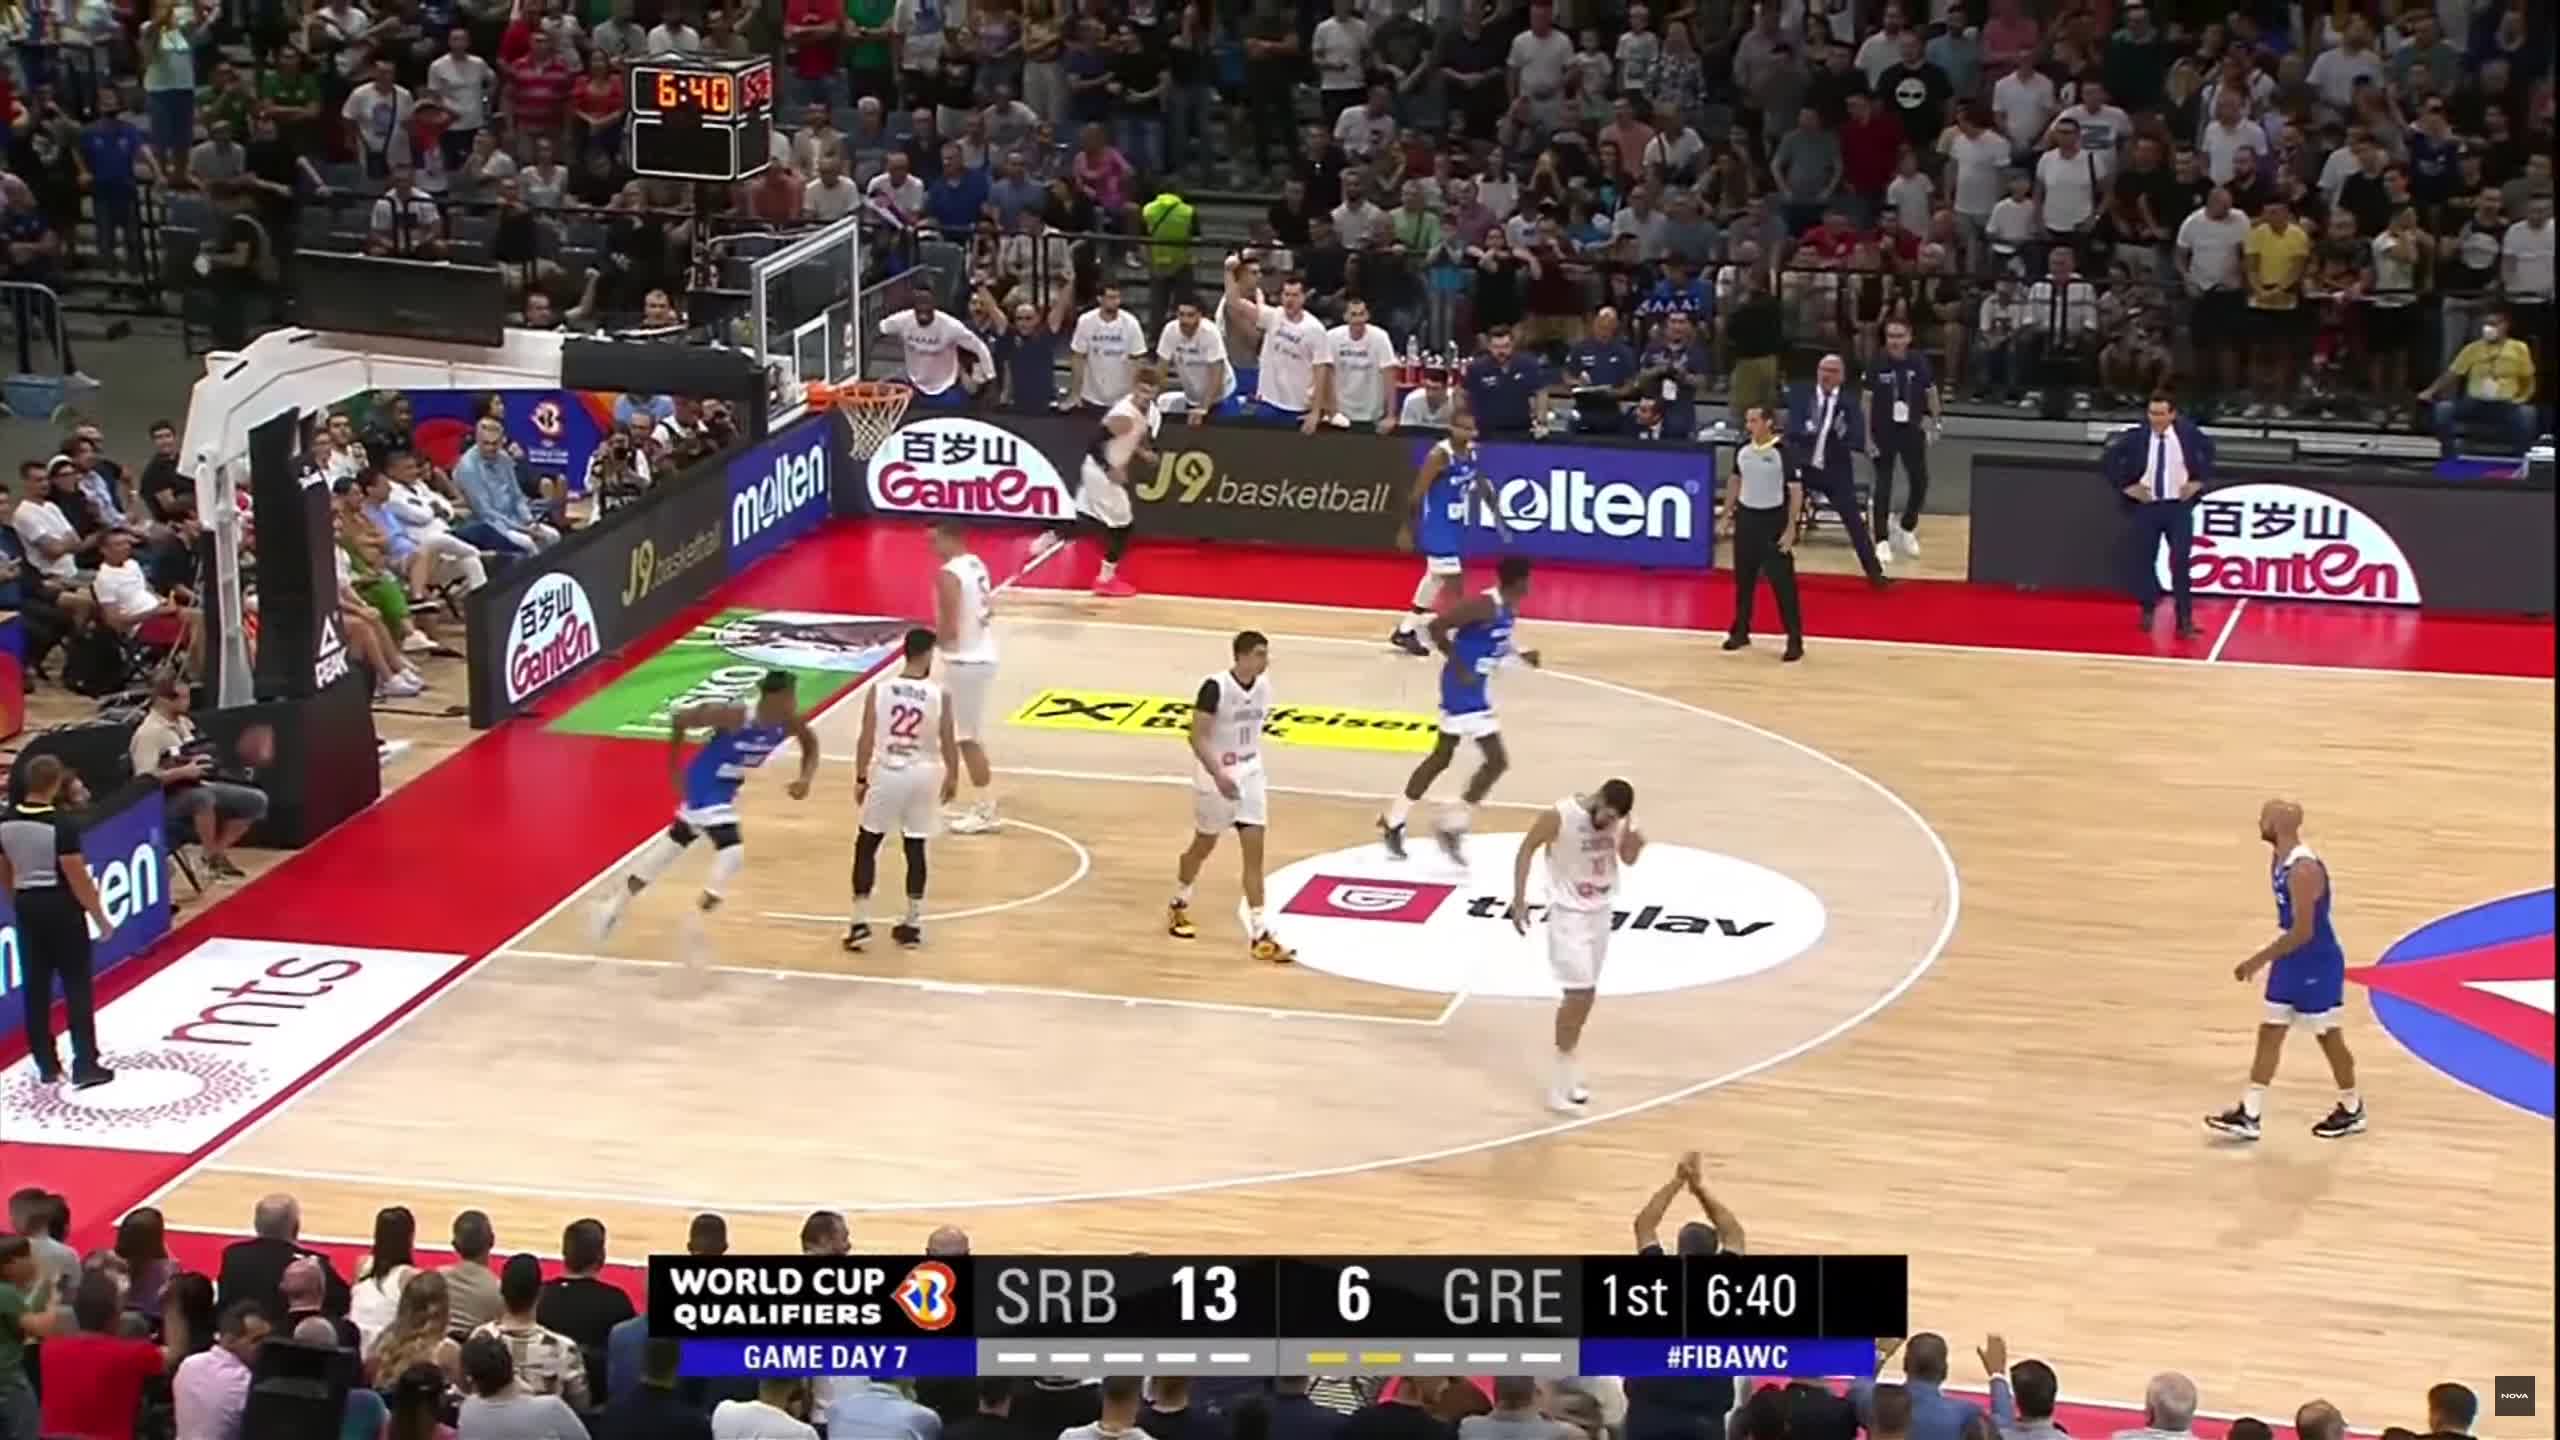 euroleague basketball live stream reddit